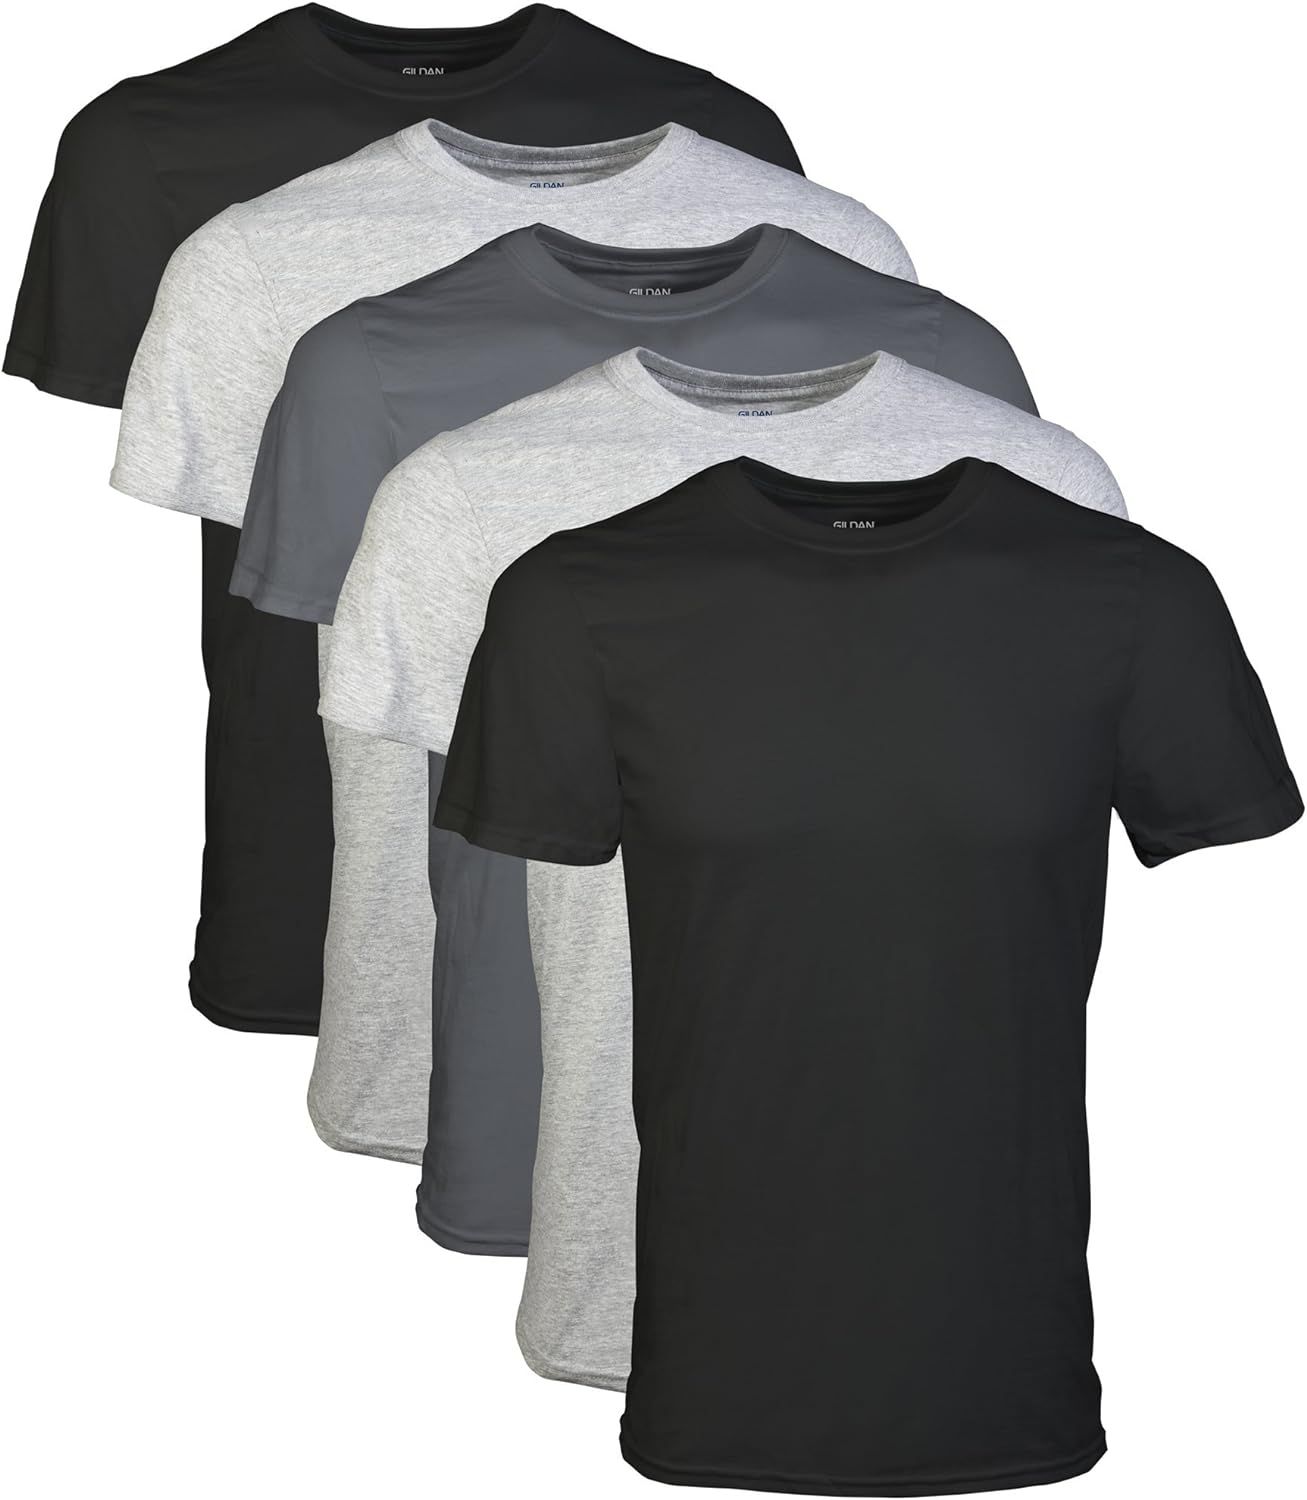 Gildan Men's Crew T-Shirts, Multipack | Amazon (US)